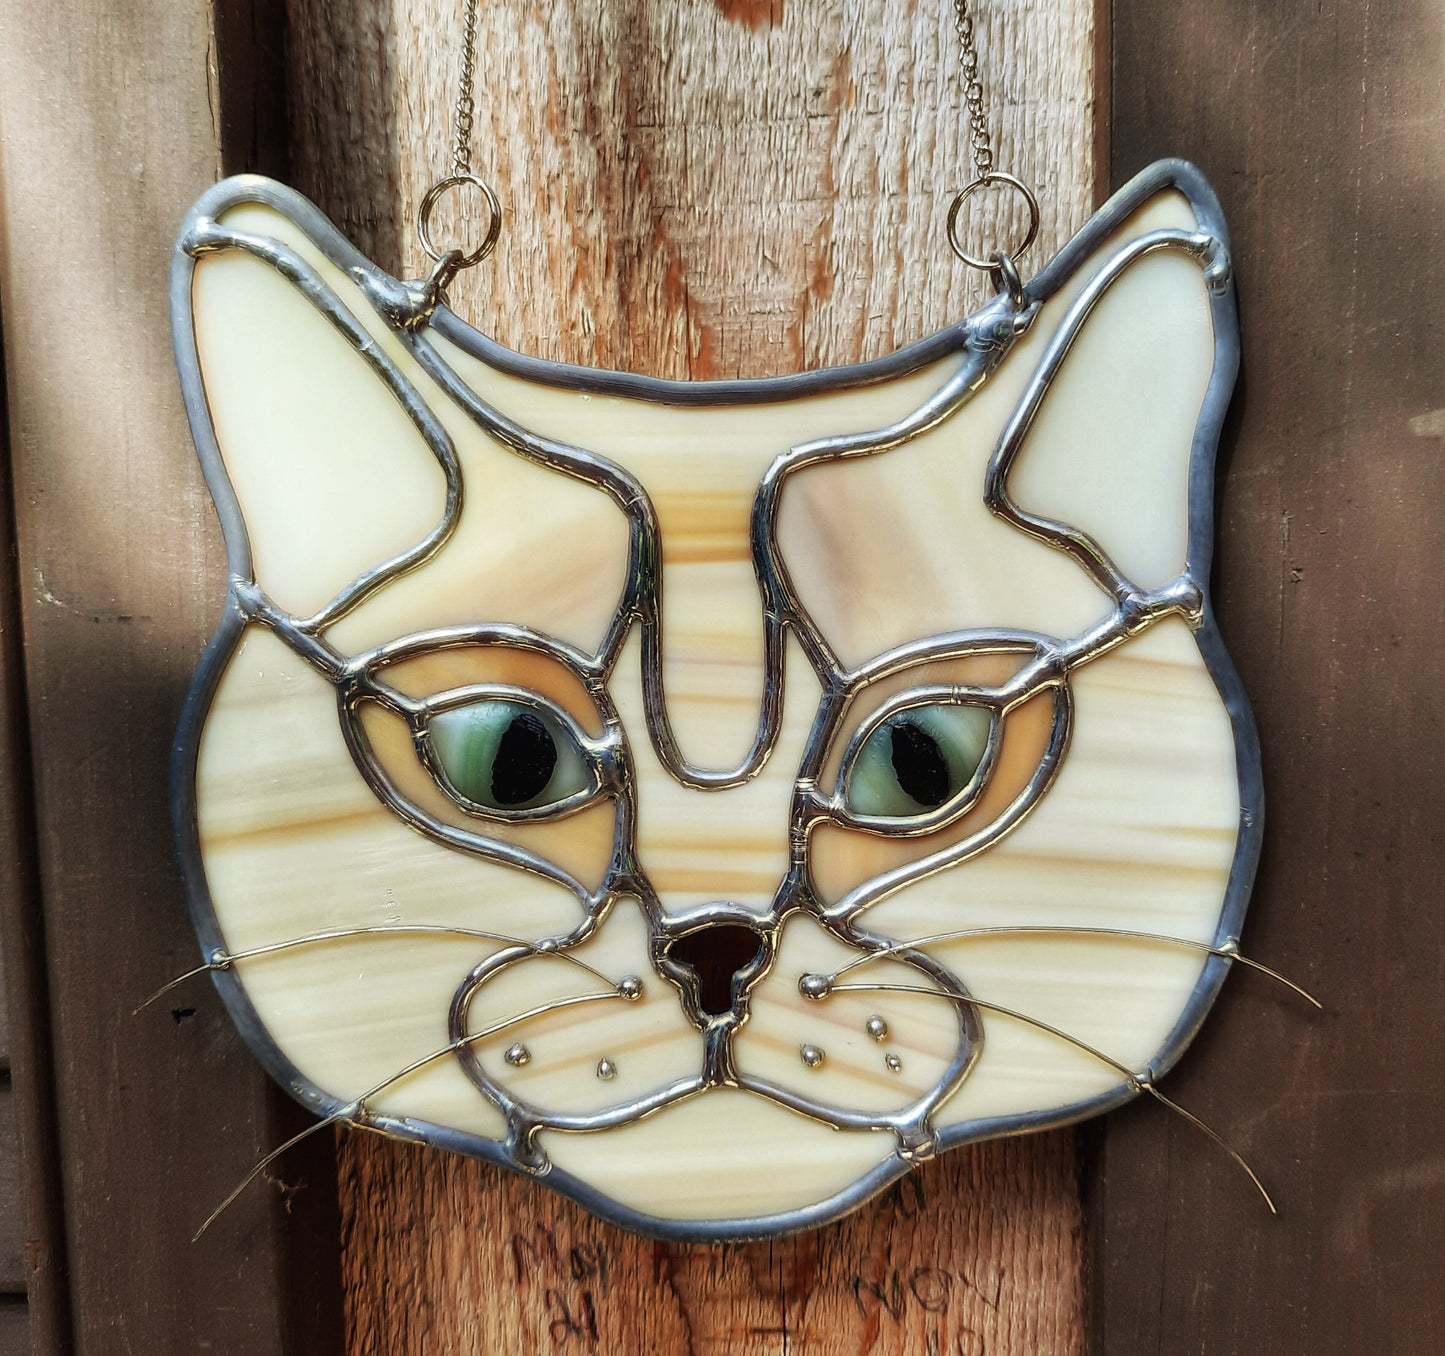 Beige-Caramel Cat Suncatcher